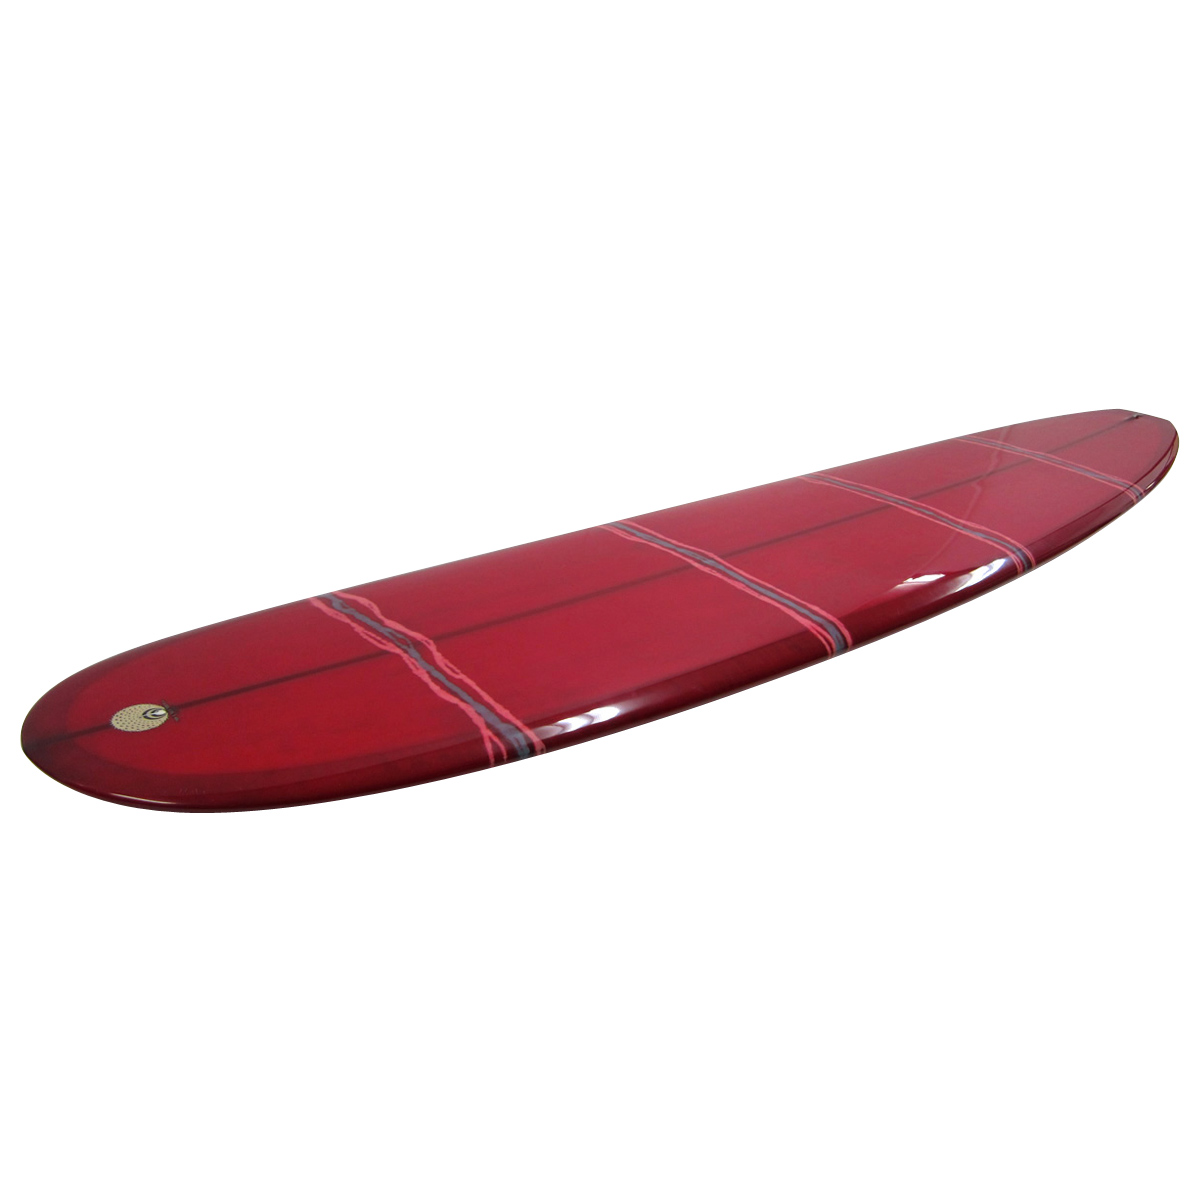 Michael Miller Surfboards / 9`0 Traditional Custom